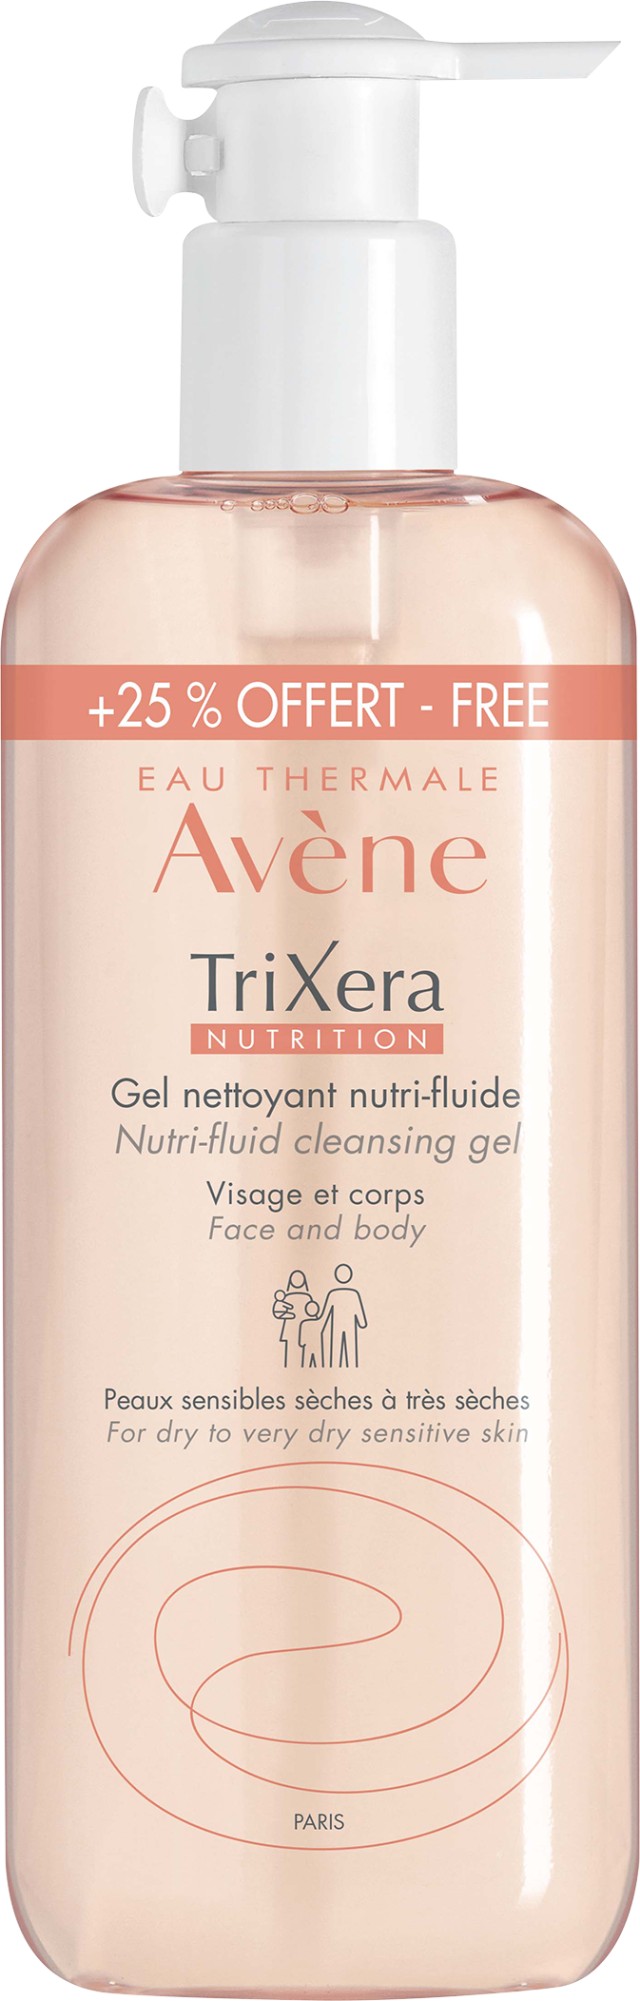 Avene Trixera Nutrition Λεπτόρρευστο Θρεπτικό Gel Καθαρισμού για Ξηρό & Πολύ Ξηρό Δέρμα 500ml